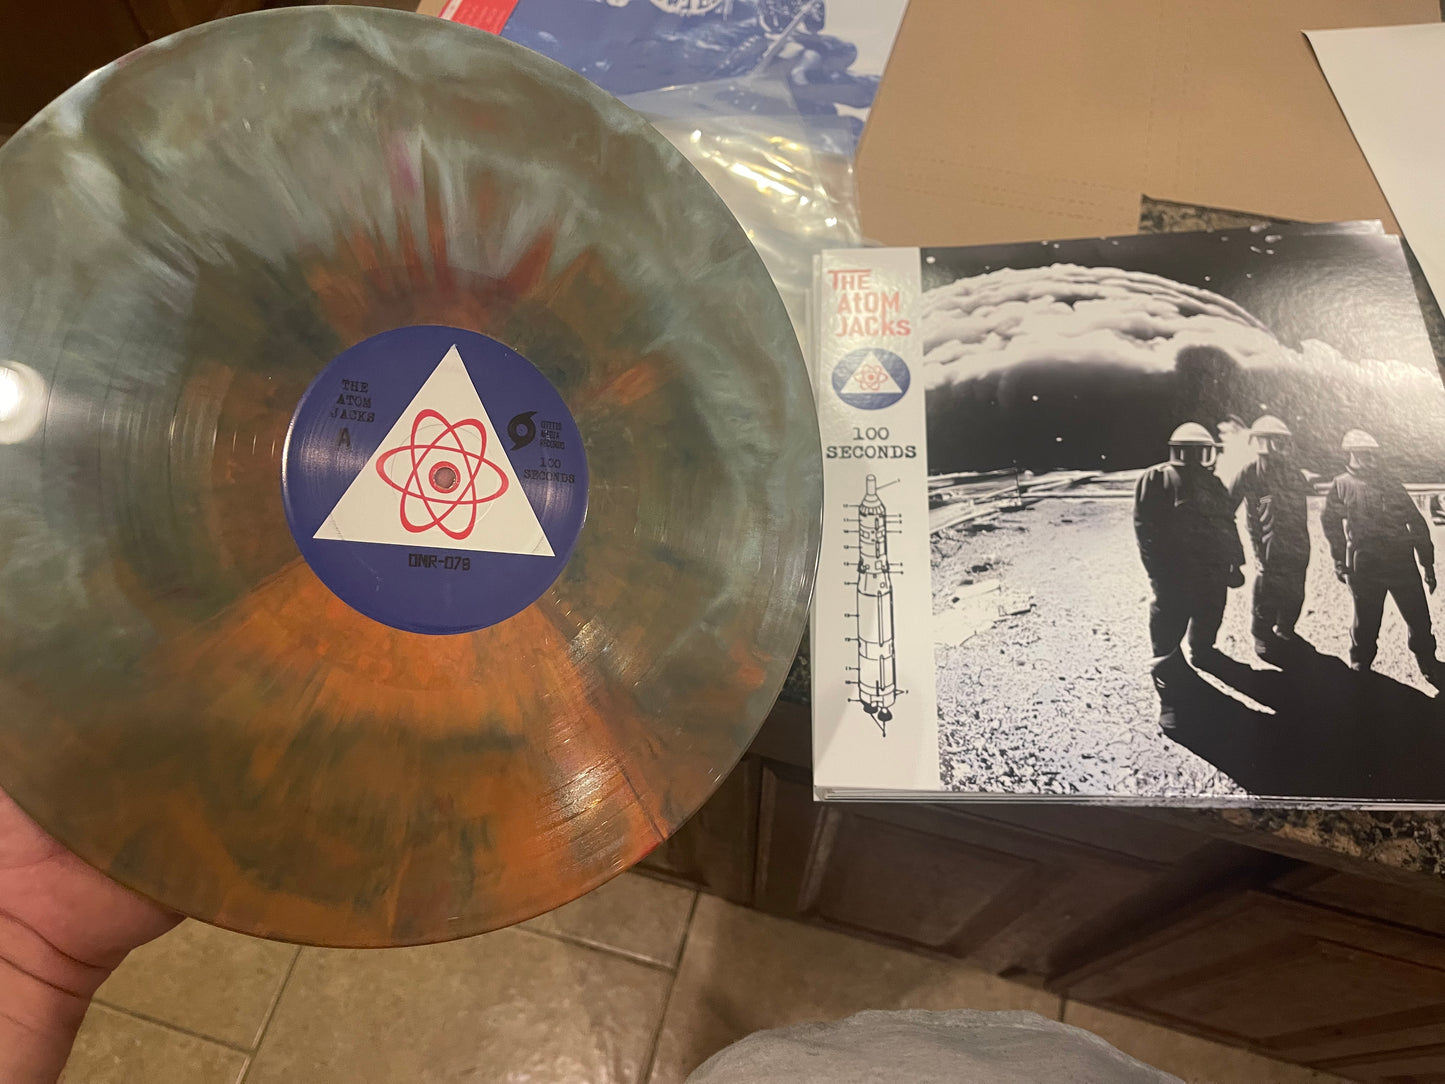 OMR-078 The Atom Jacks “100 Seconds” CD/ Vinyl/Wax Mage